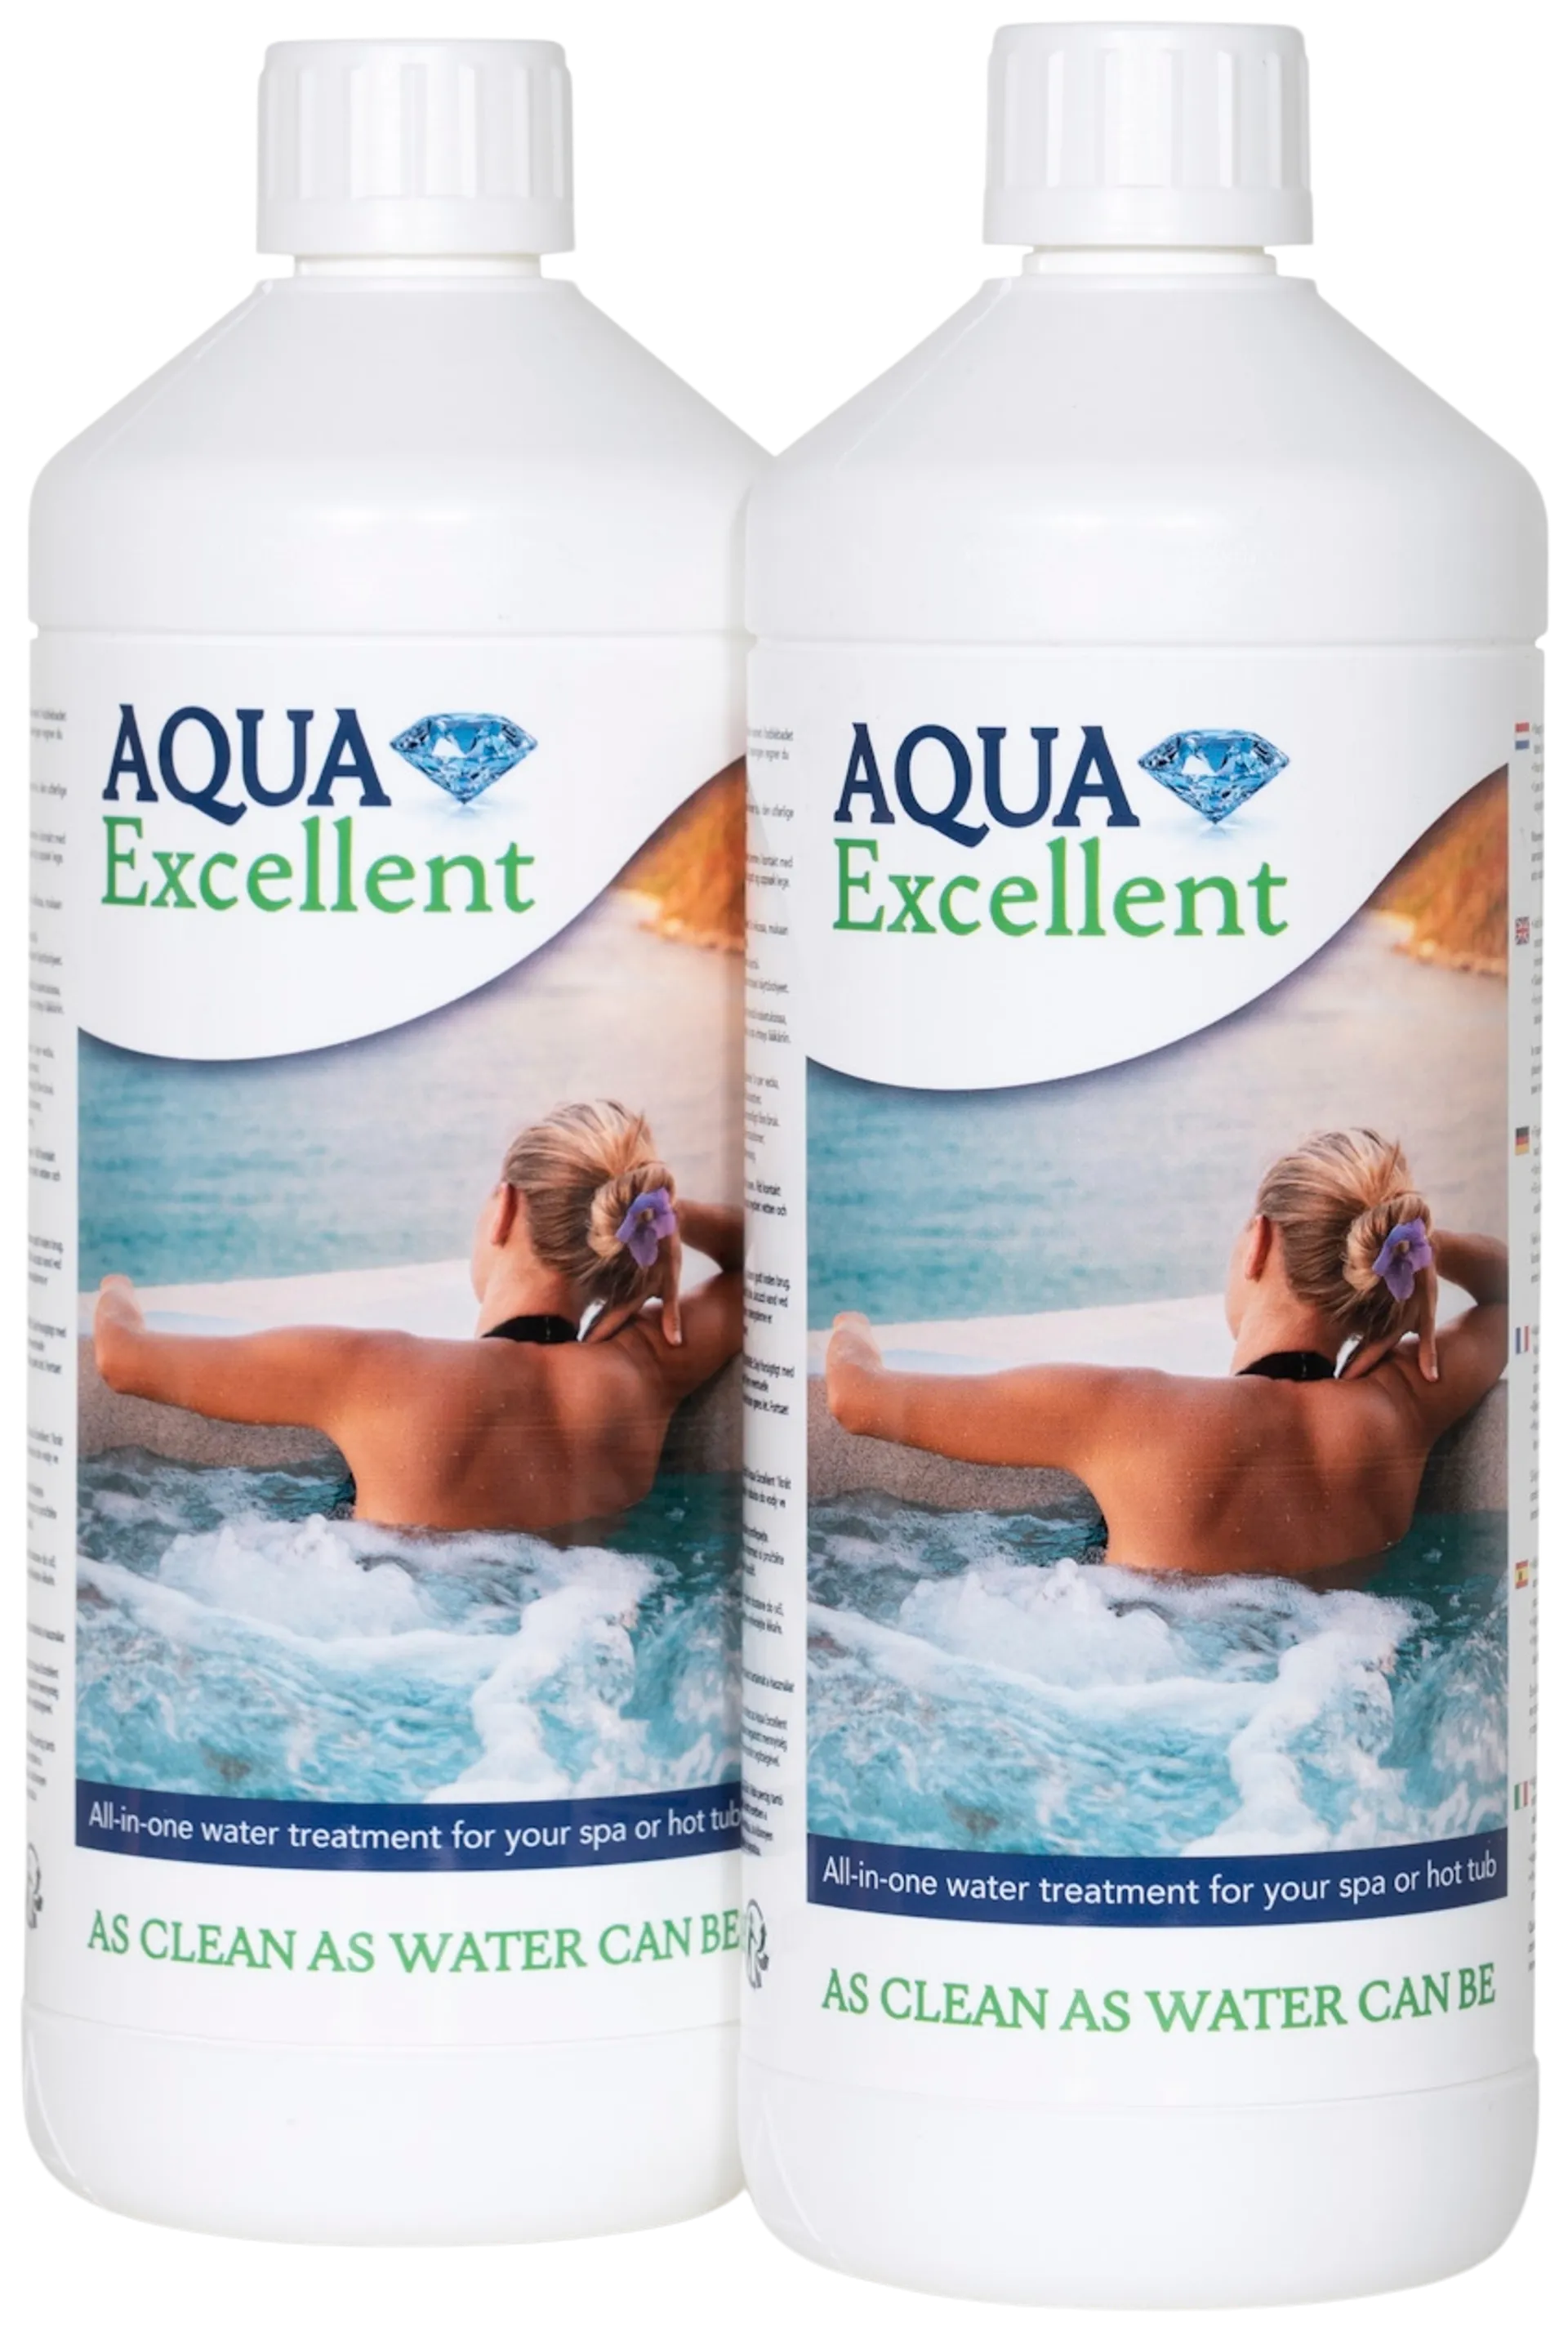 Aqua Exellent vedenhoitoaine täyttöpakkaus 2L - 1